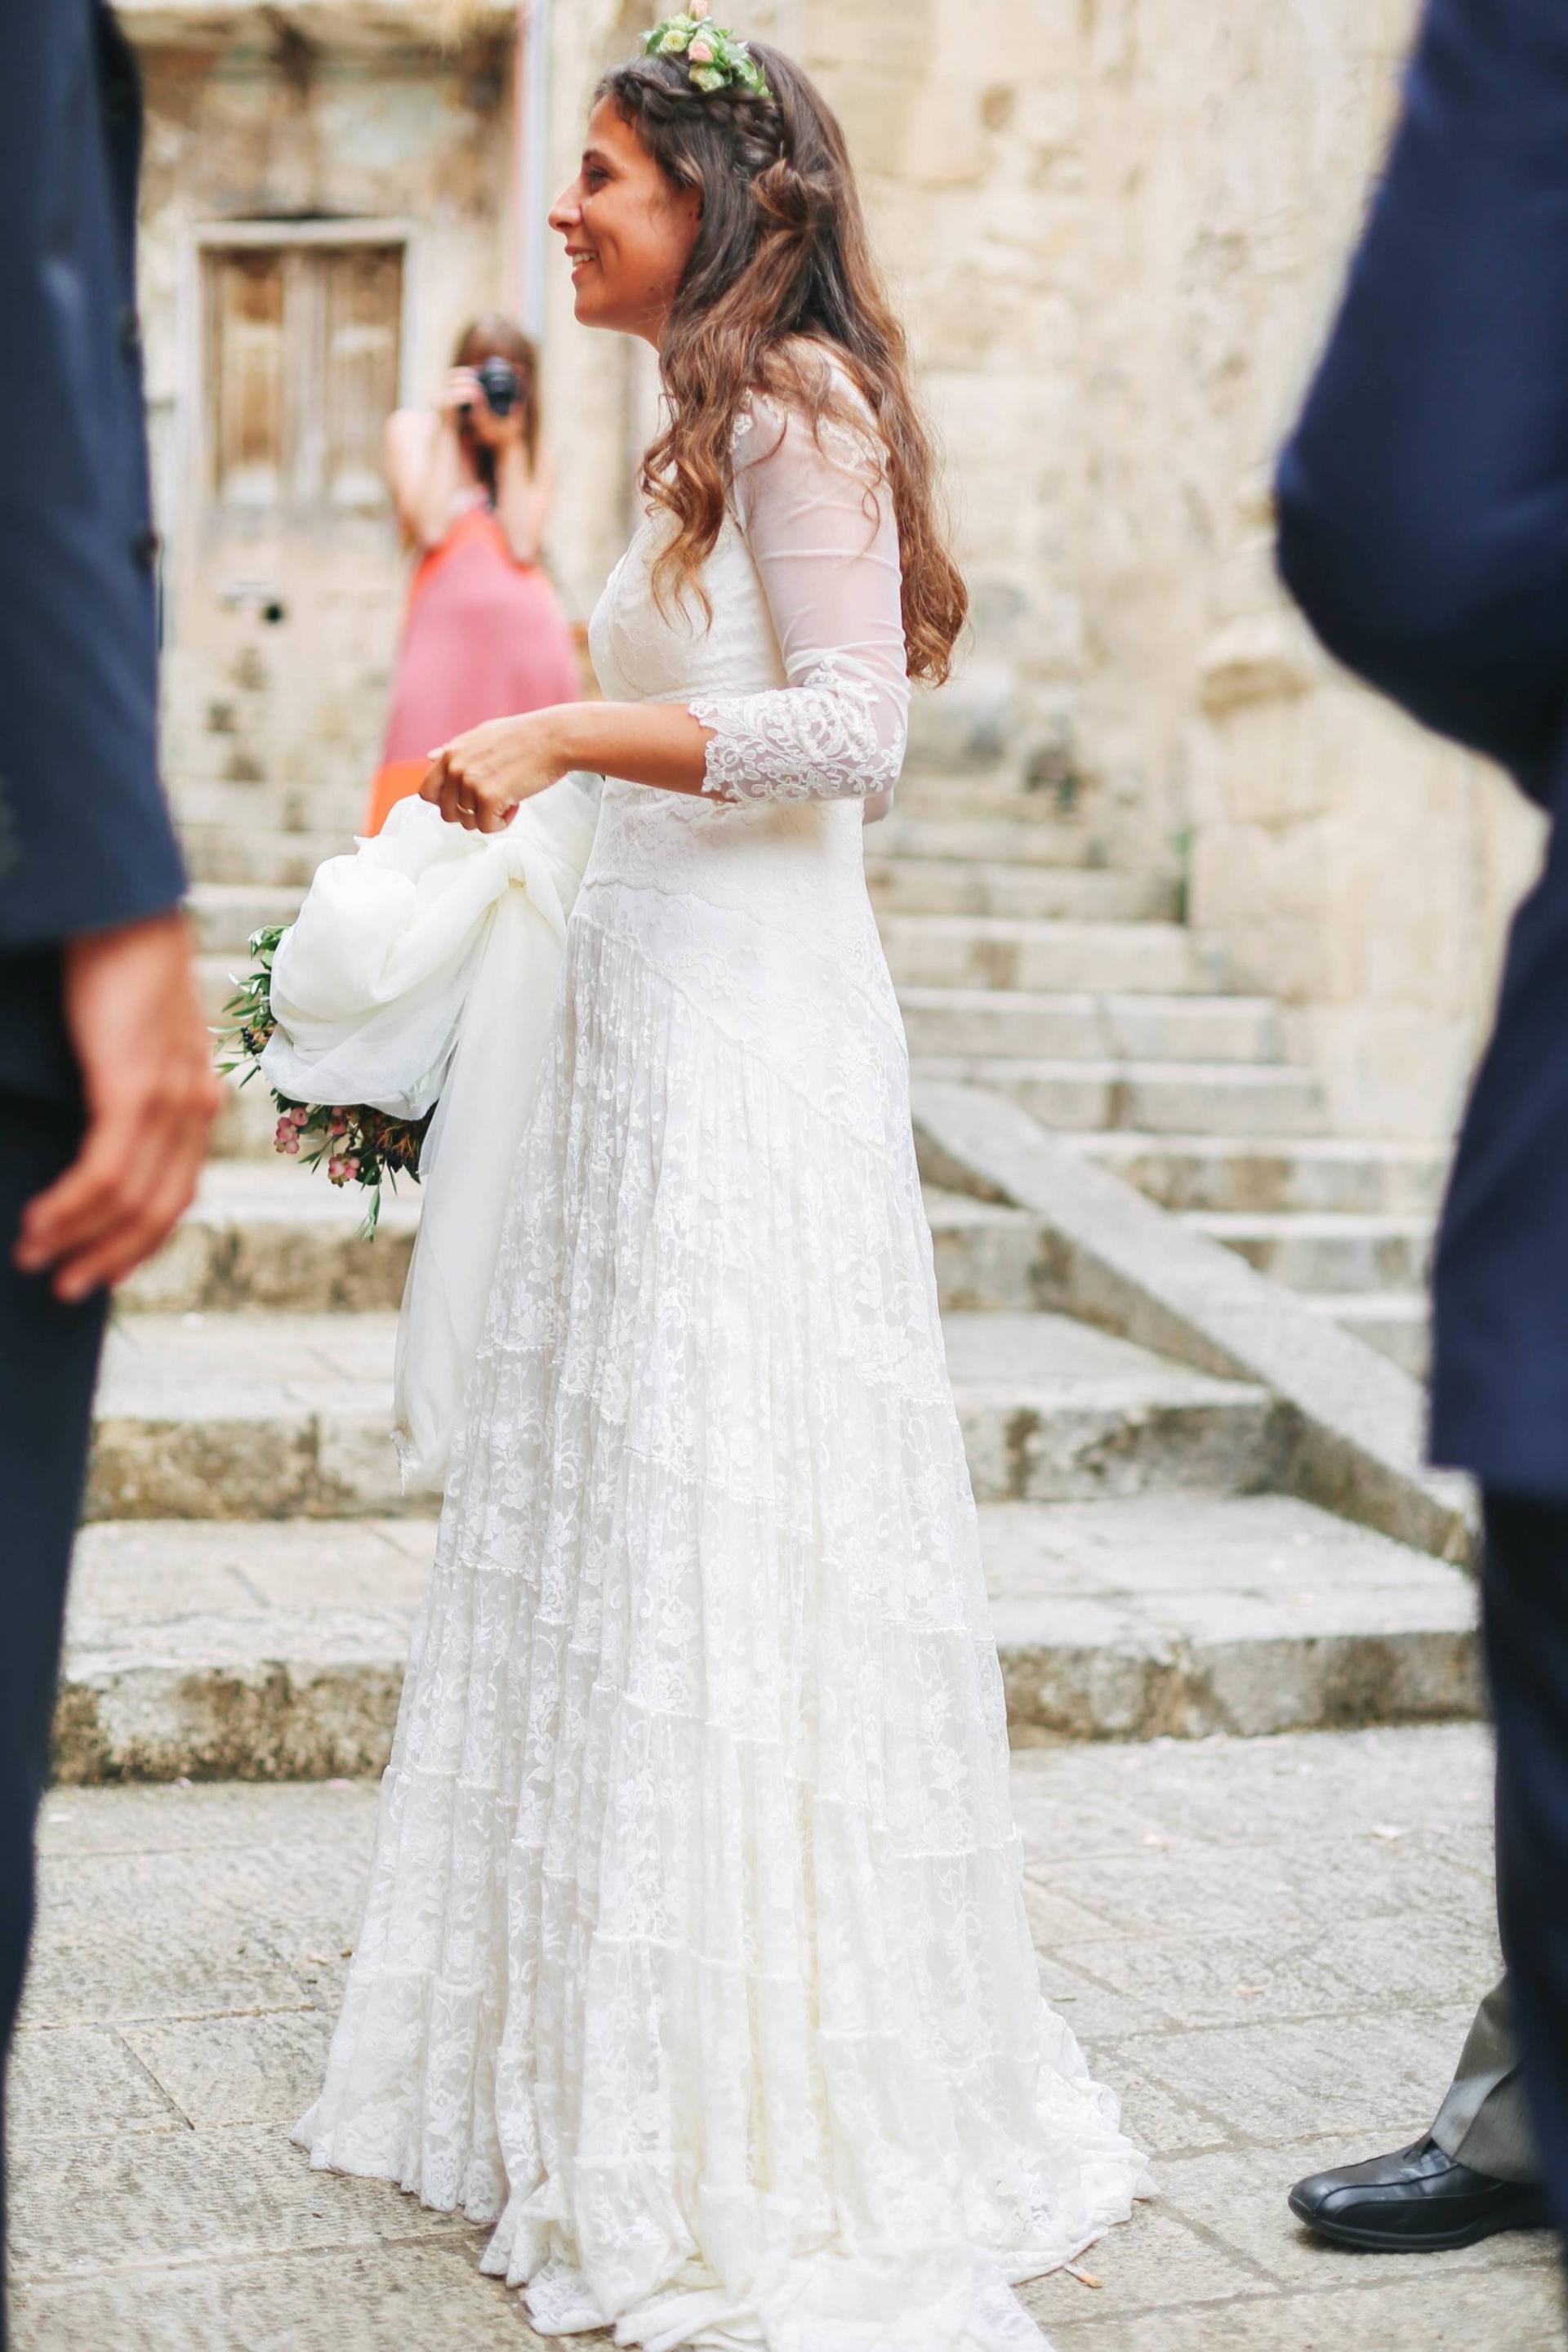 Umberto&Ludovica Matrimonio Sicilia Wedding Sicily MCE Stories Destination Photographer